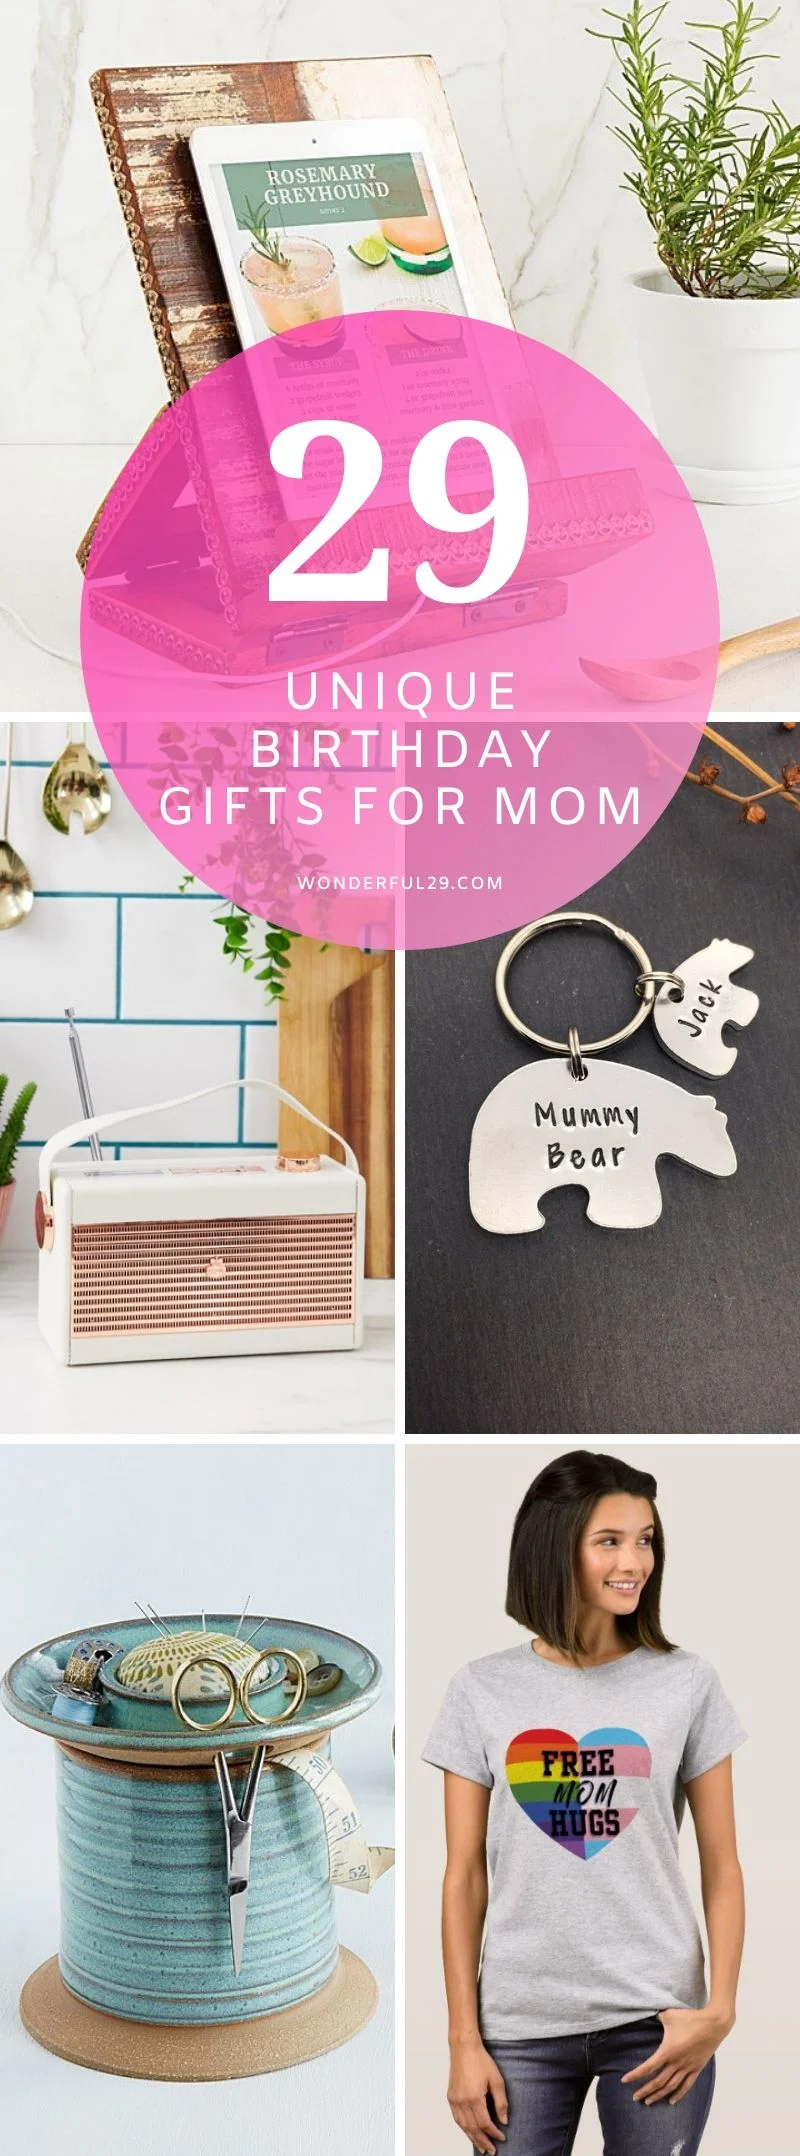 birthday gifts for mom w29 pinterest share.jpg